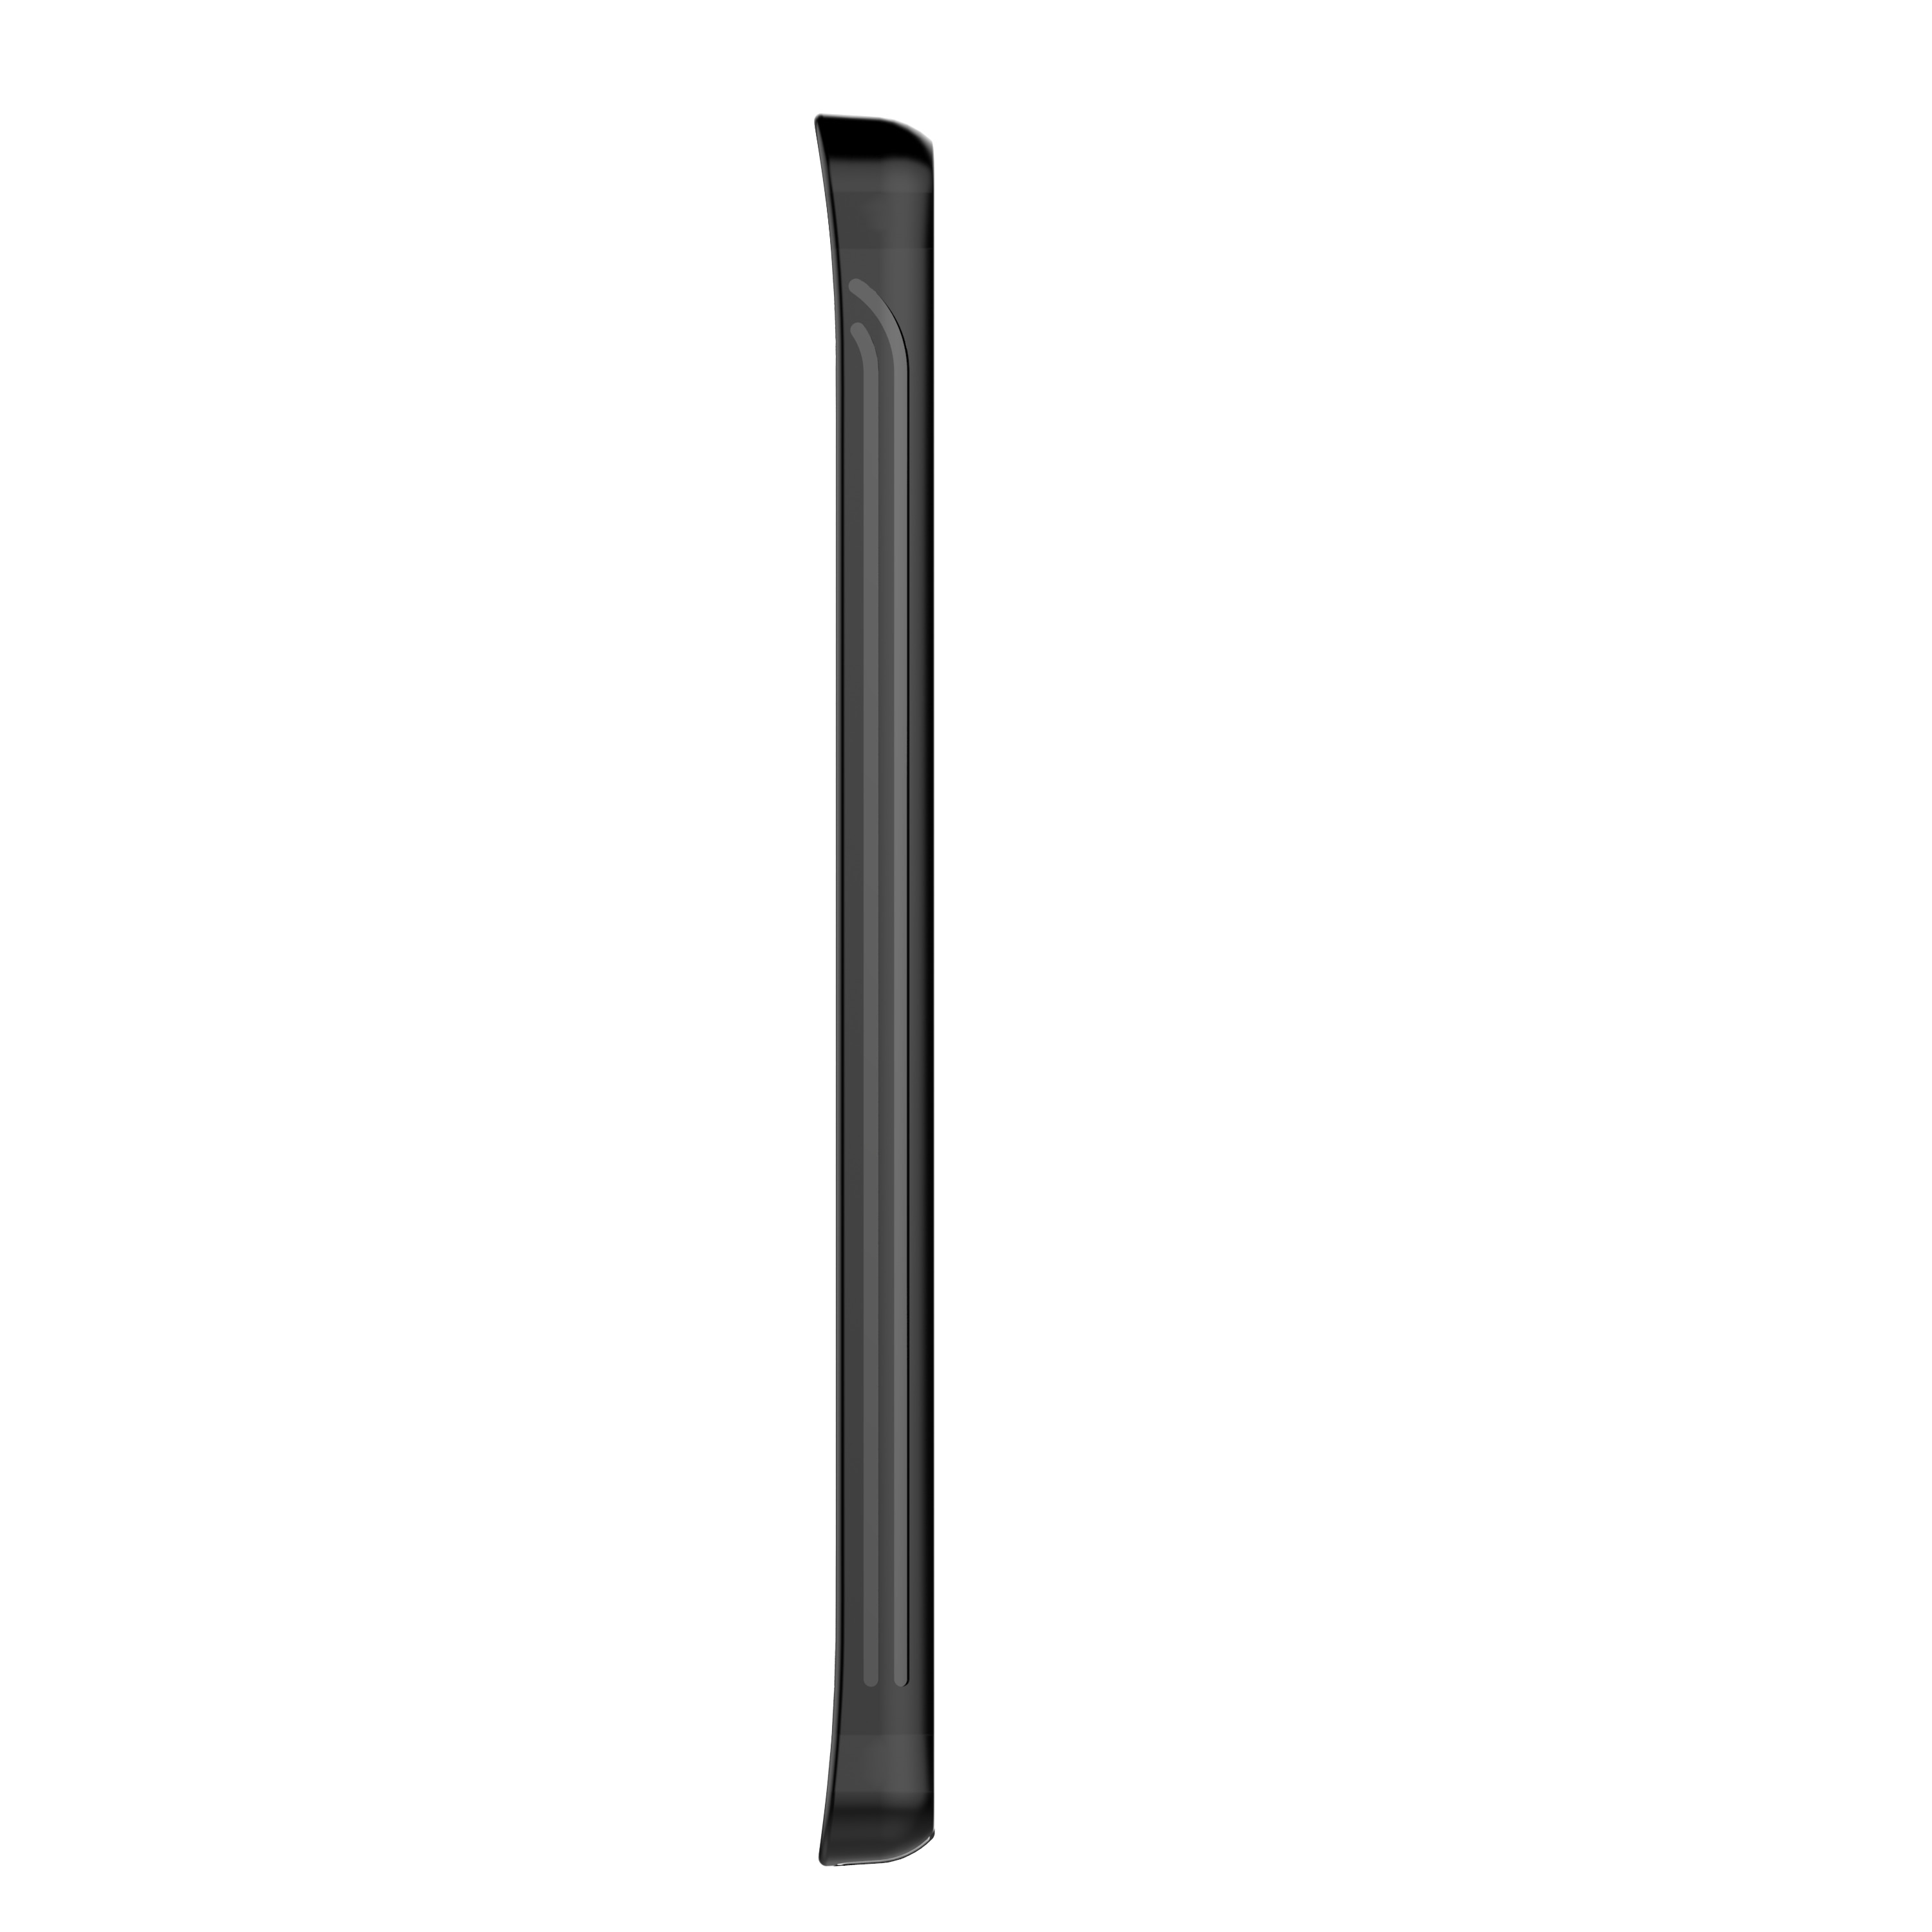 Coque Premium Full Protection Samsung Galaxy Note 10 Plus, noir